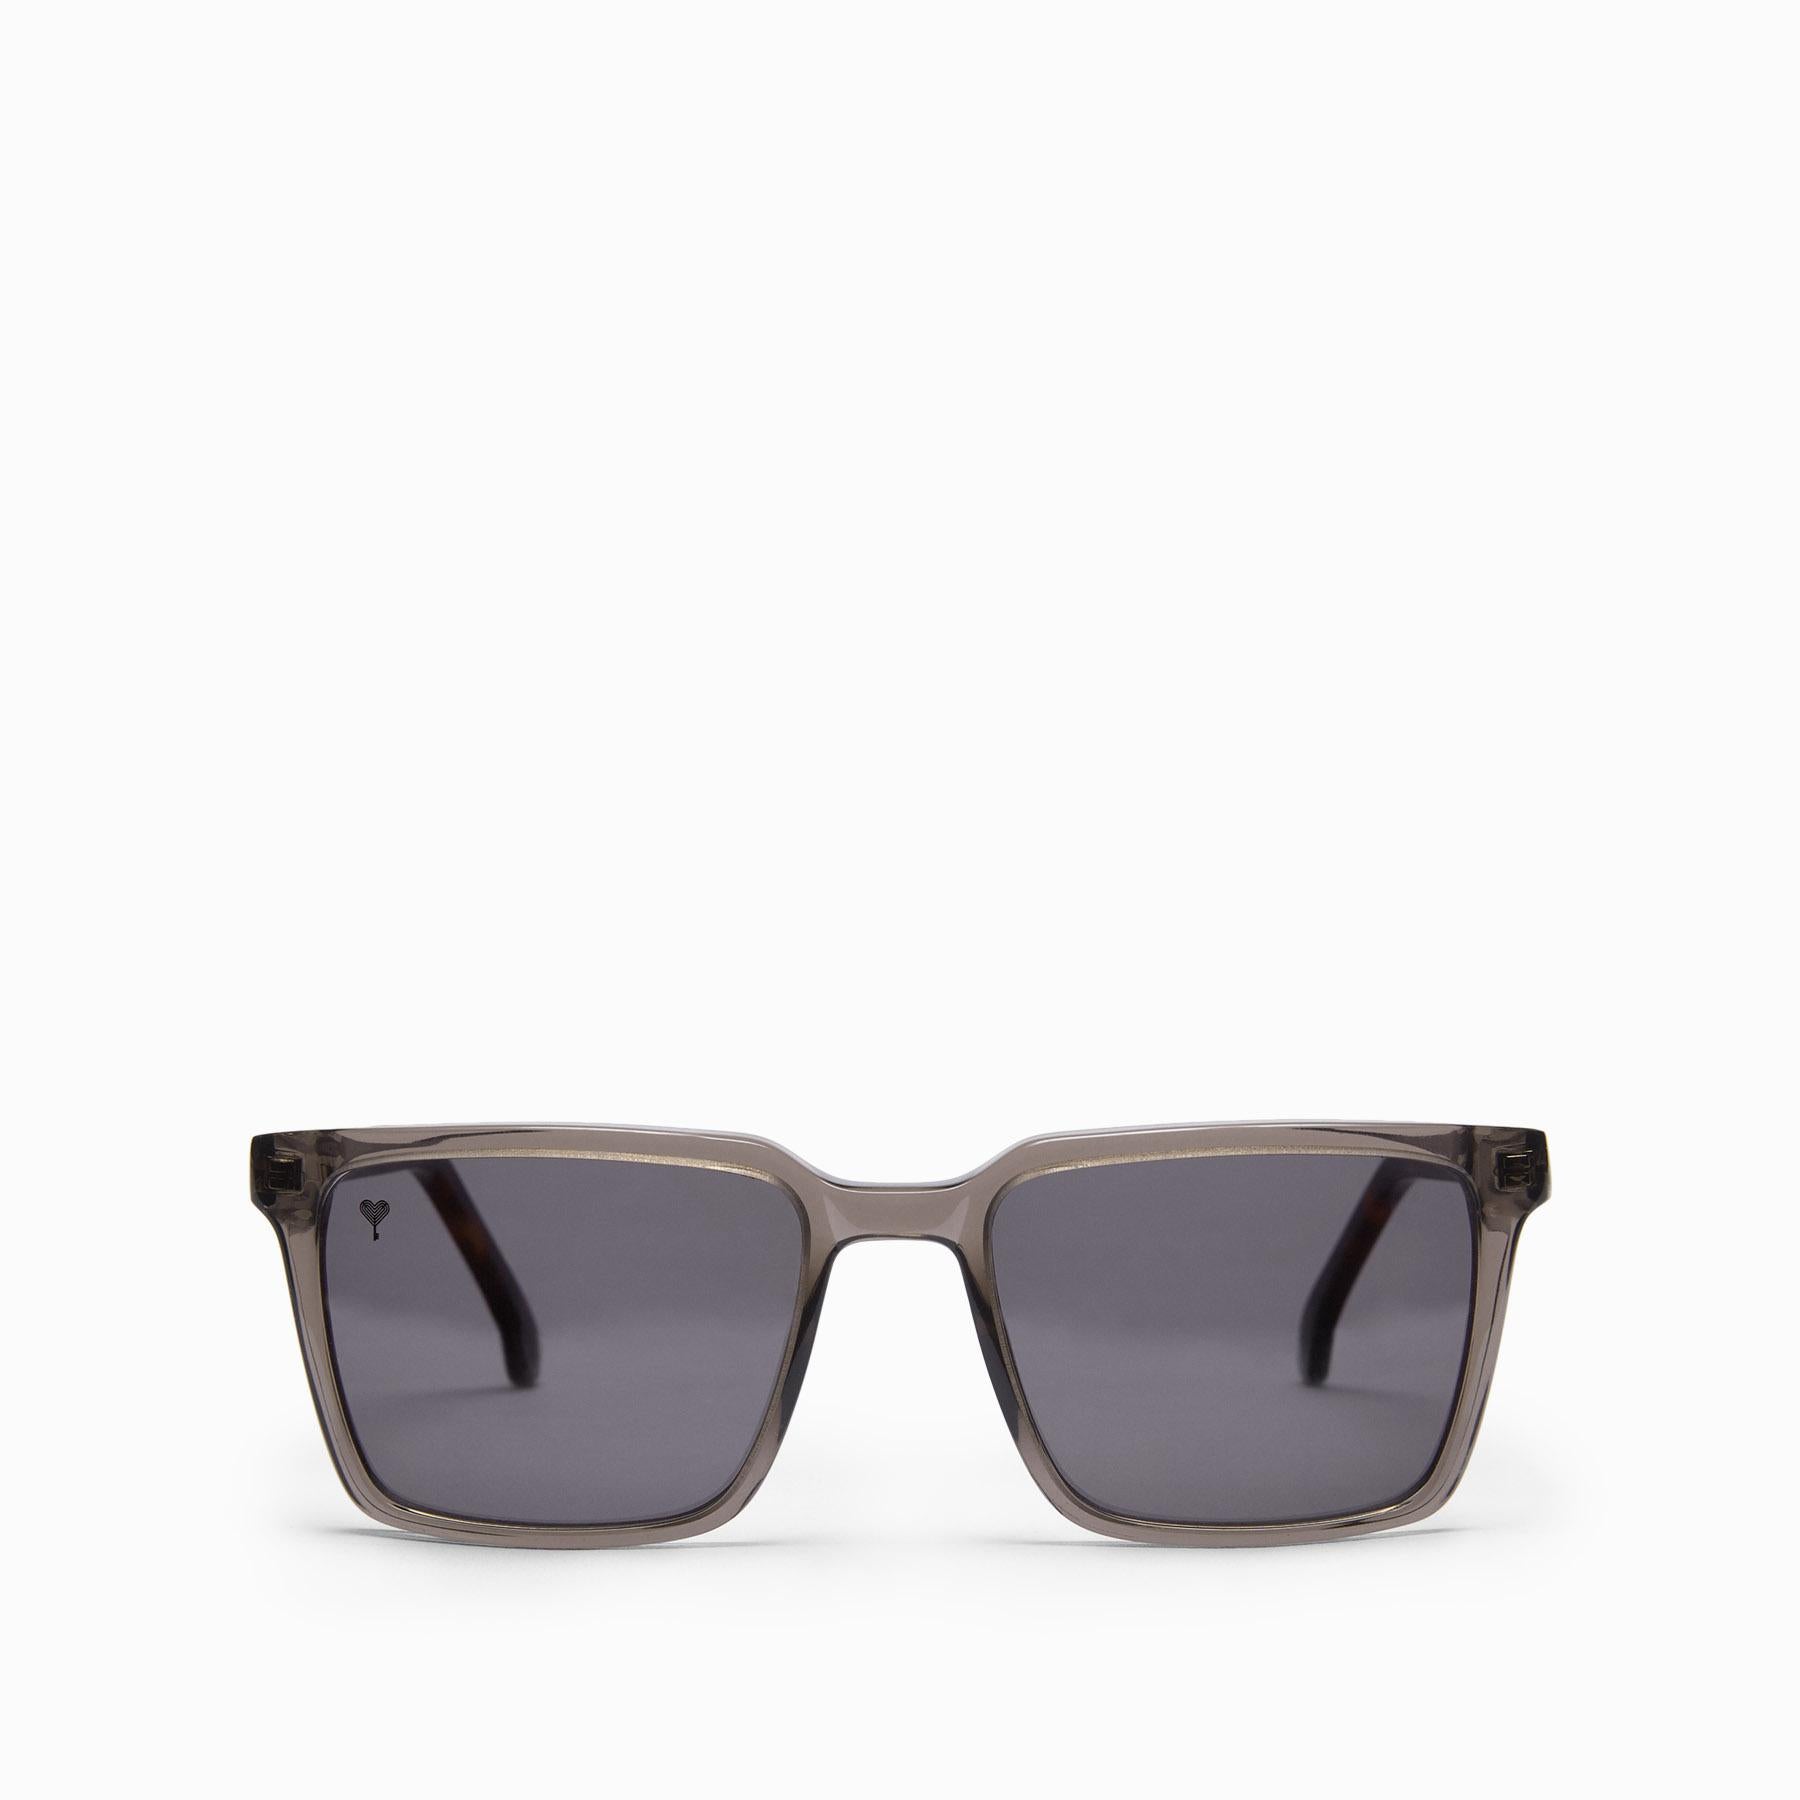 Charcoal Square Sunglasses